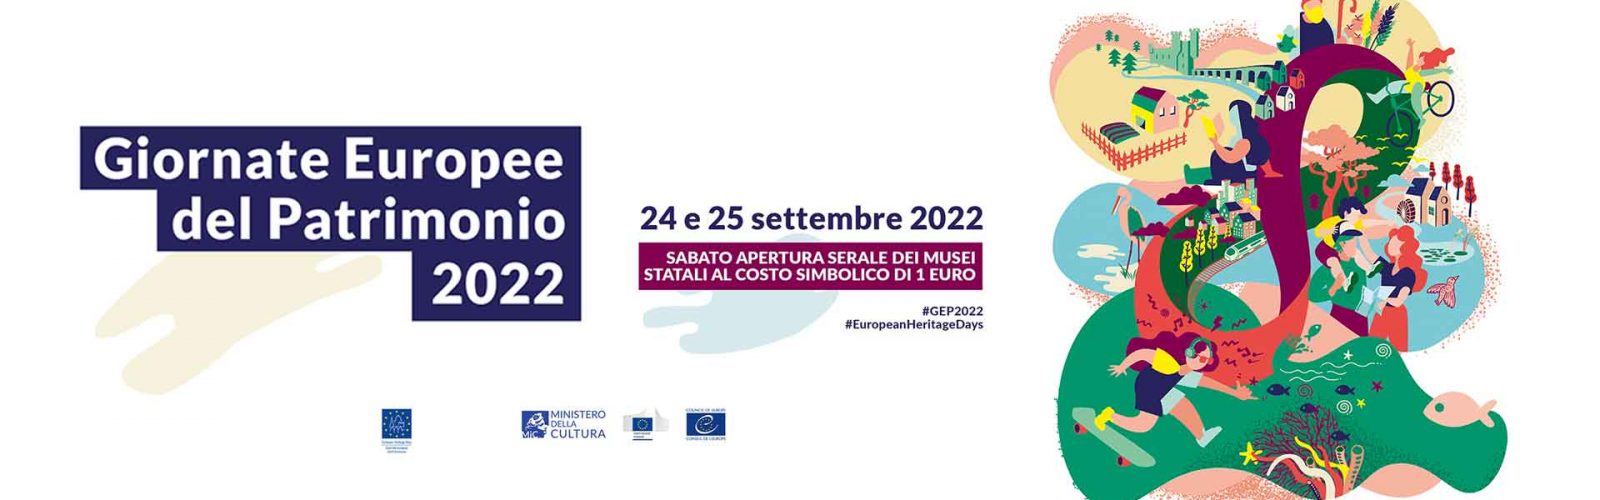 <strong>Giornate Europee del Patrimonio 2022</strong><br> Ingresso serale a 1 euro